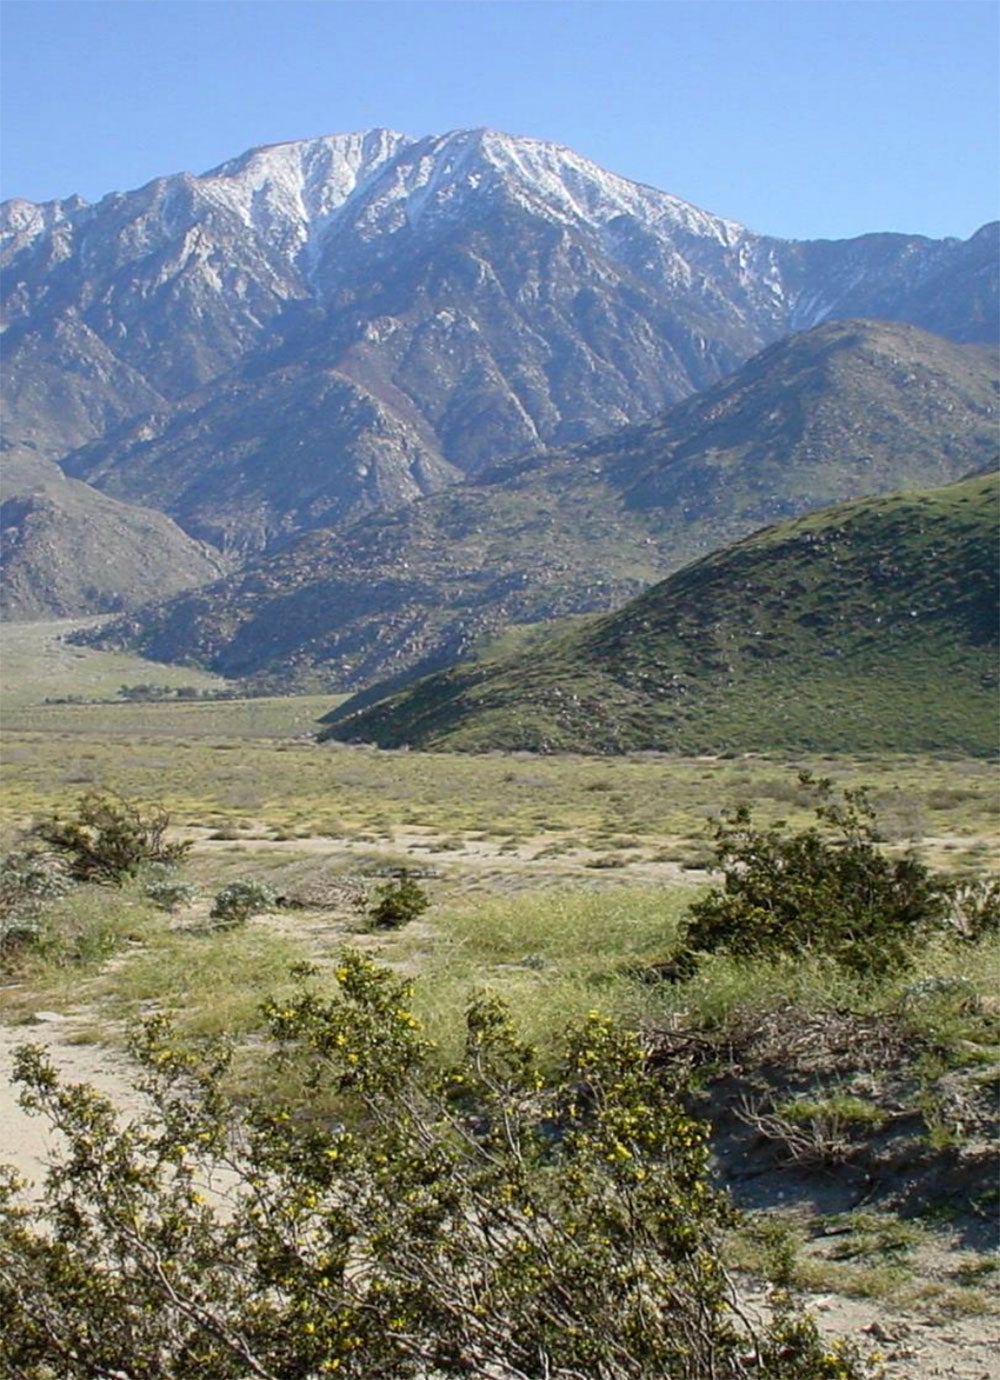 View of Mt. San Jacinto from San Bernardino National Forest land